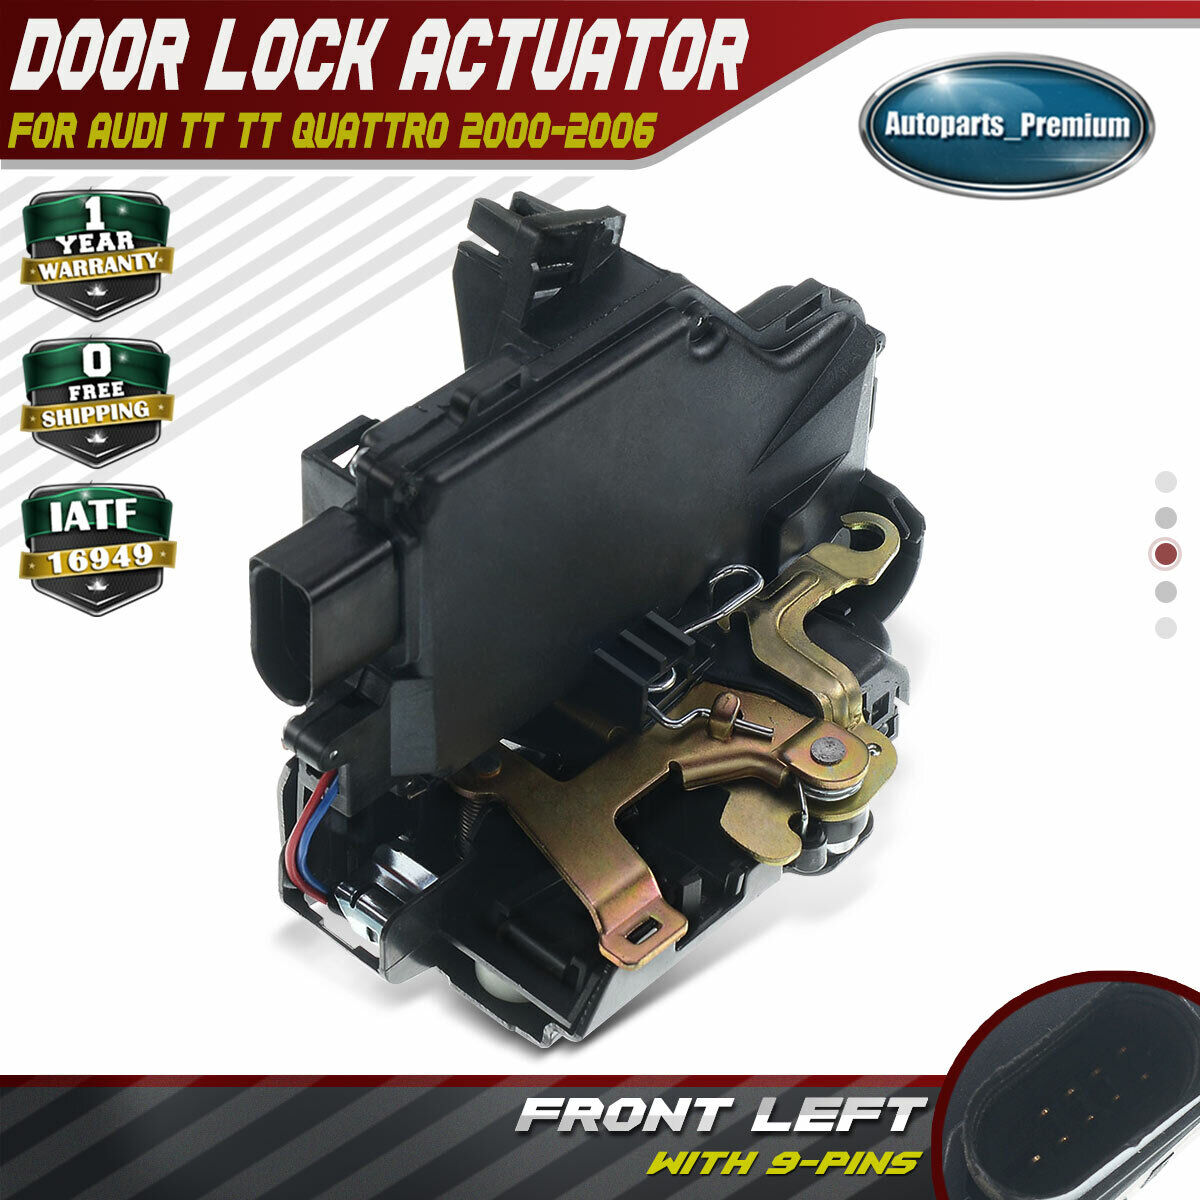 Front Left Driver Side Door Lock Actuator for Audi TT Quattro 2000-2006 9 Pins